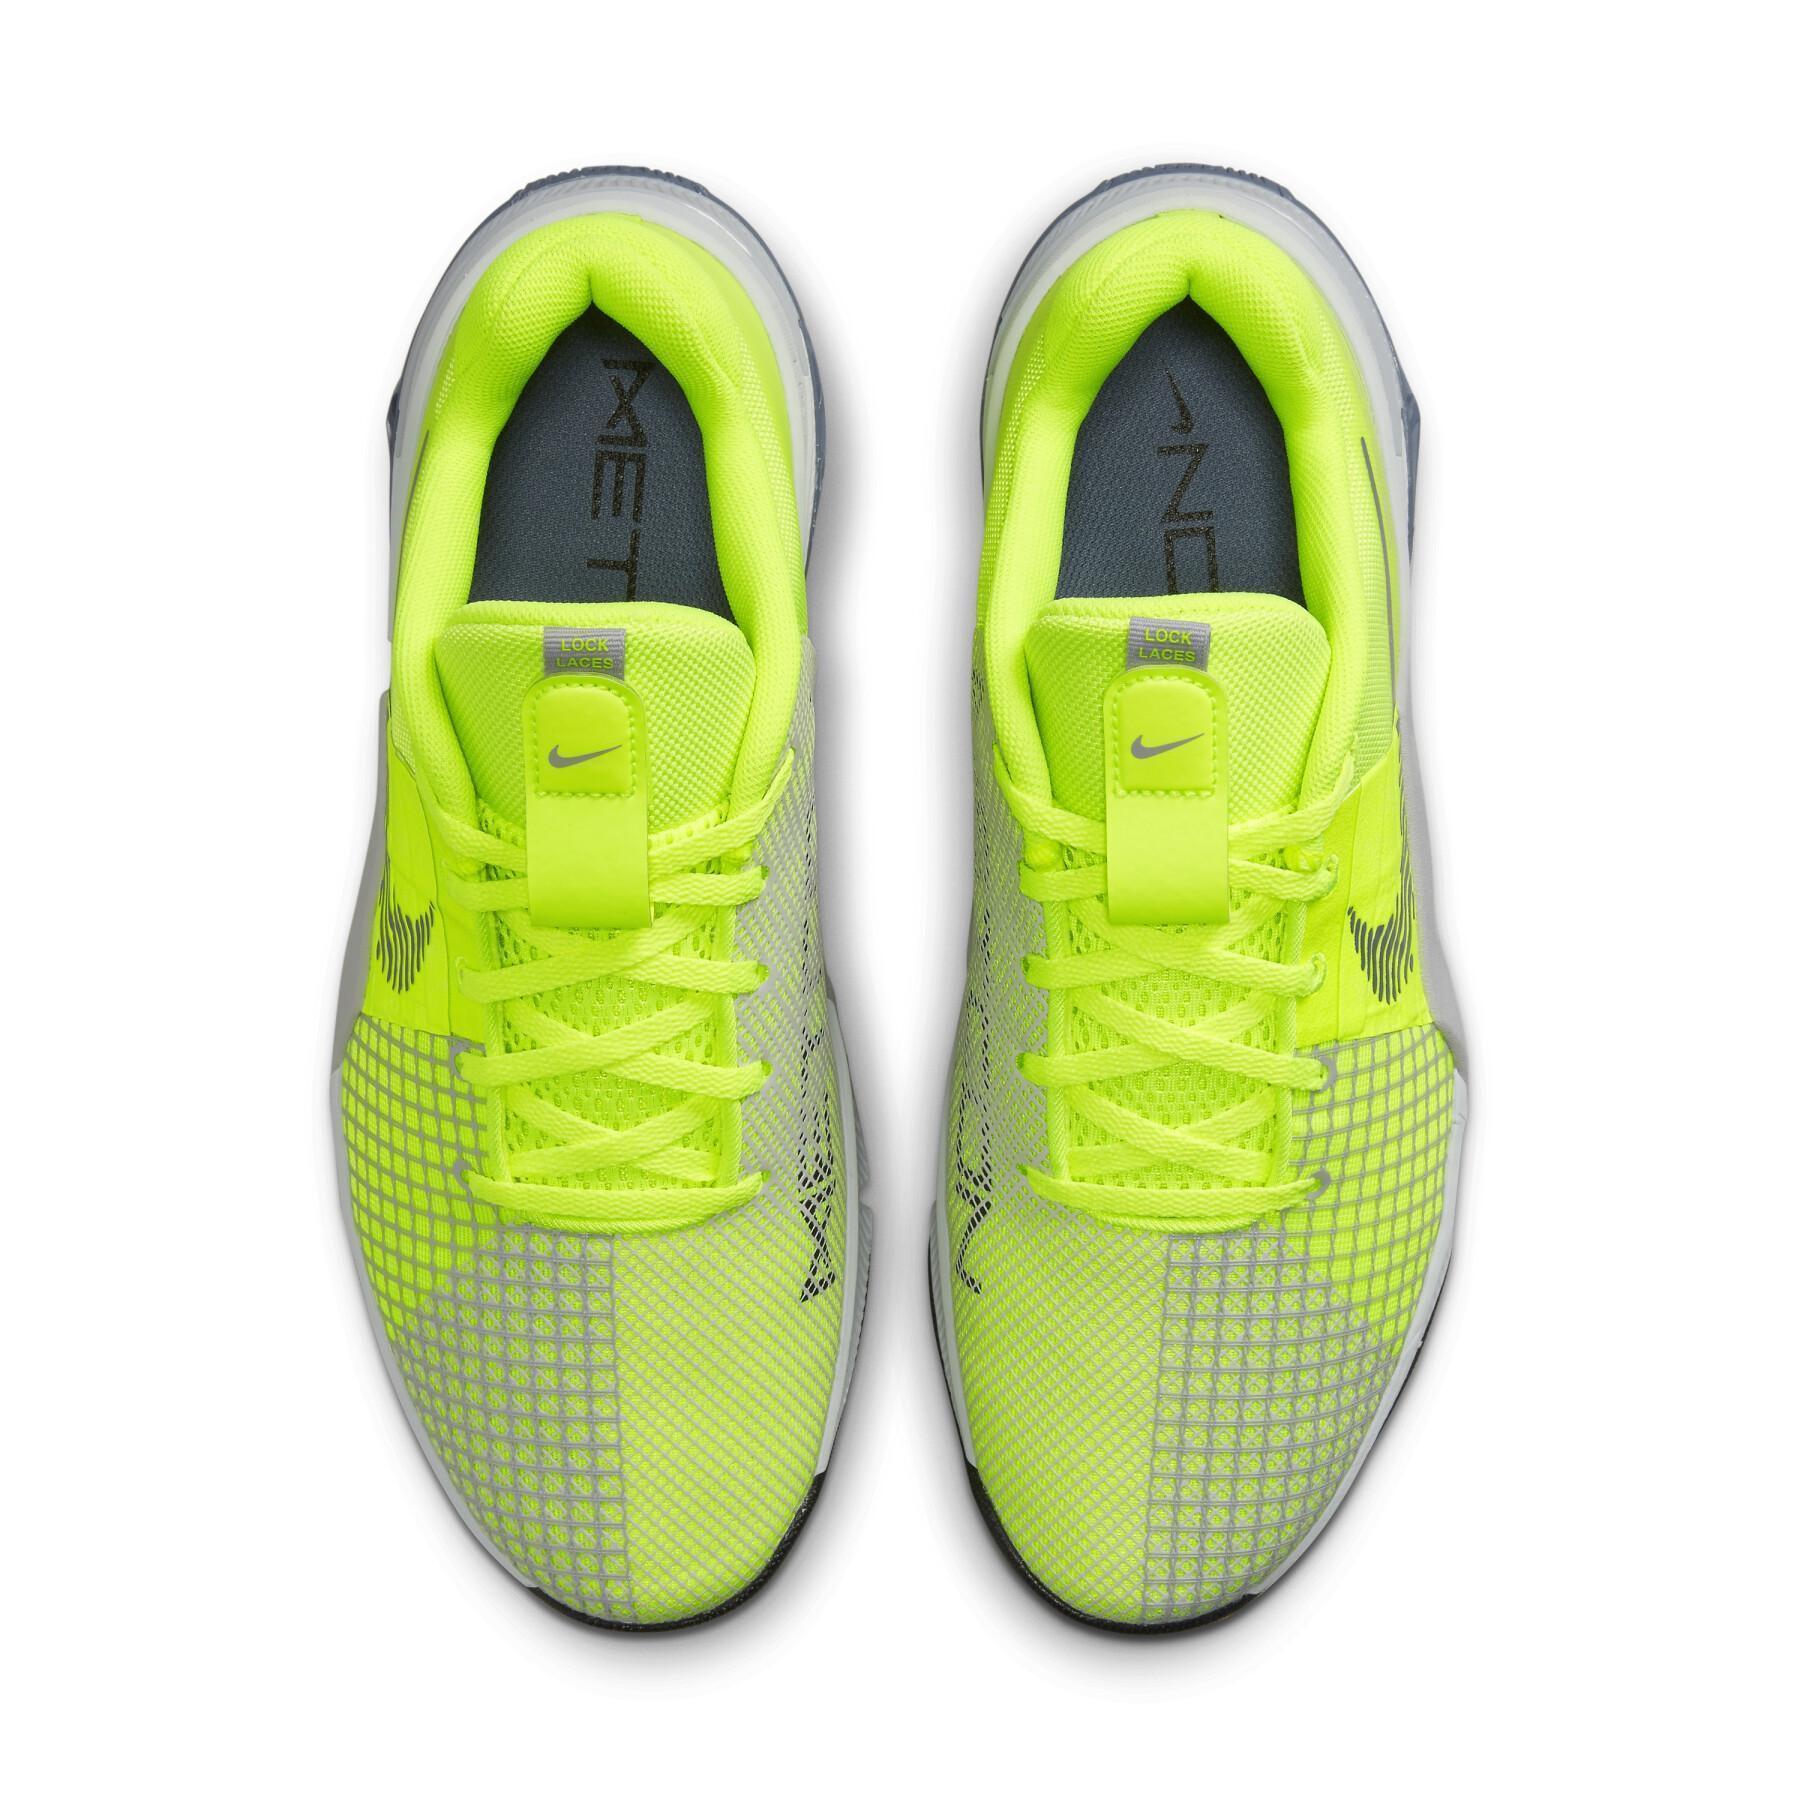 Chaussures de cross training Nike Metcon 8